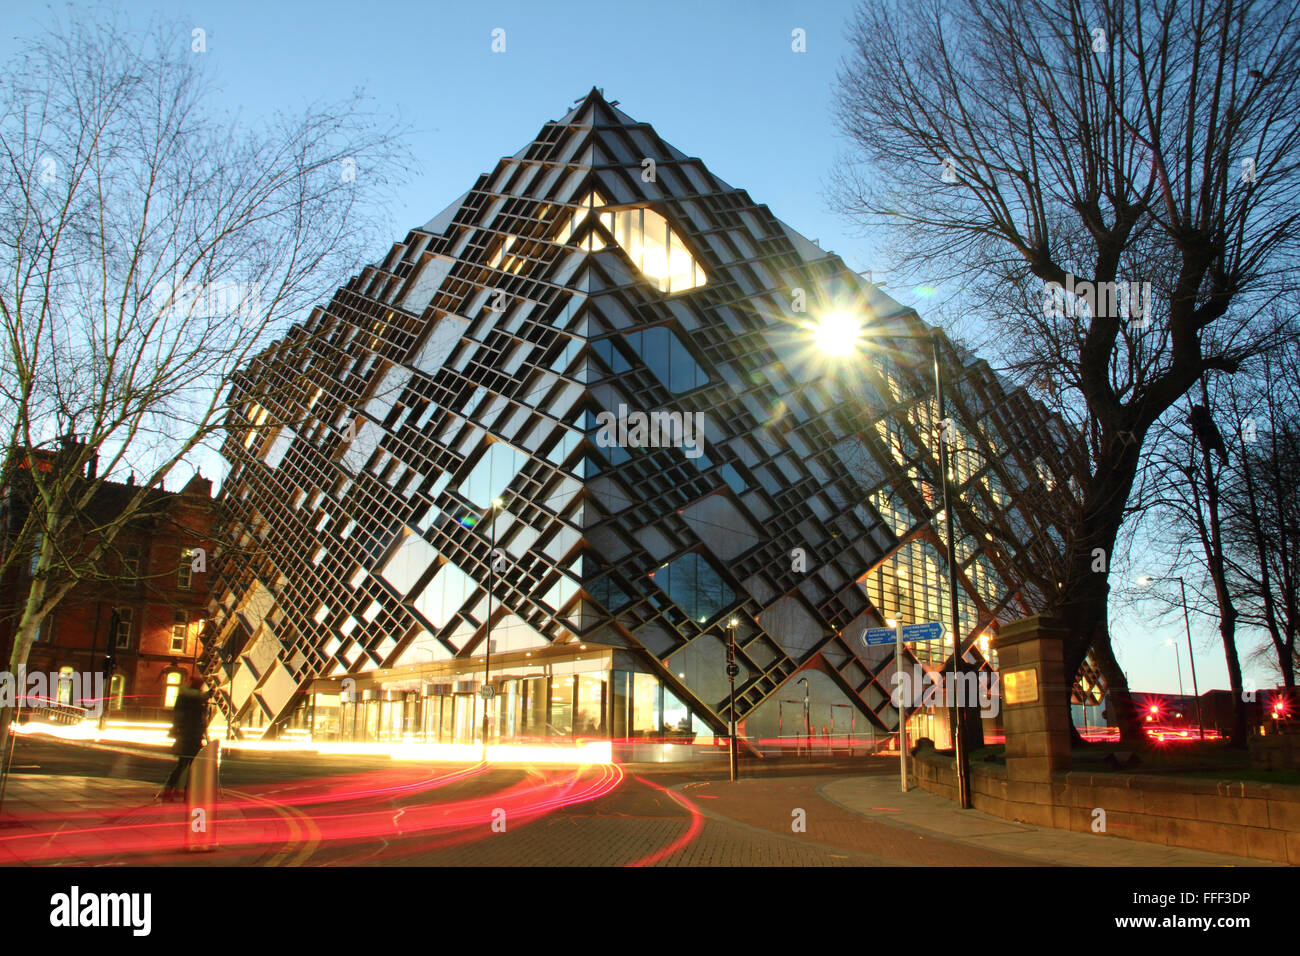 The University of Sheffield's Diamond building in Sheffield city centre, South Yorkshire England - 2016 Stock Photo